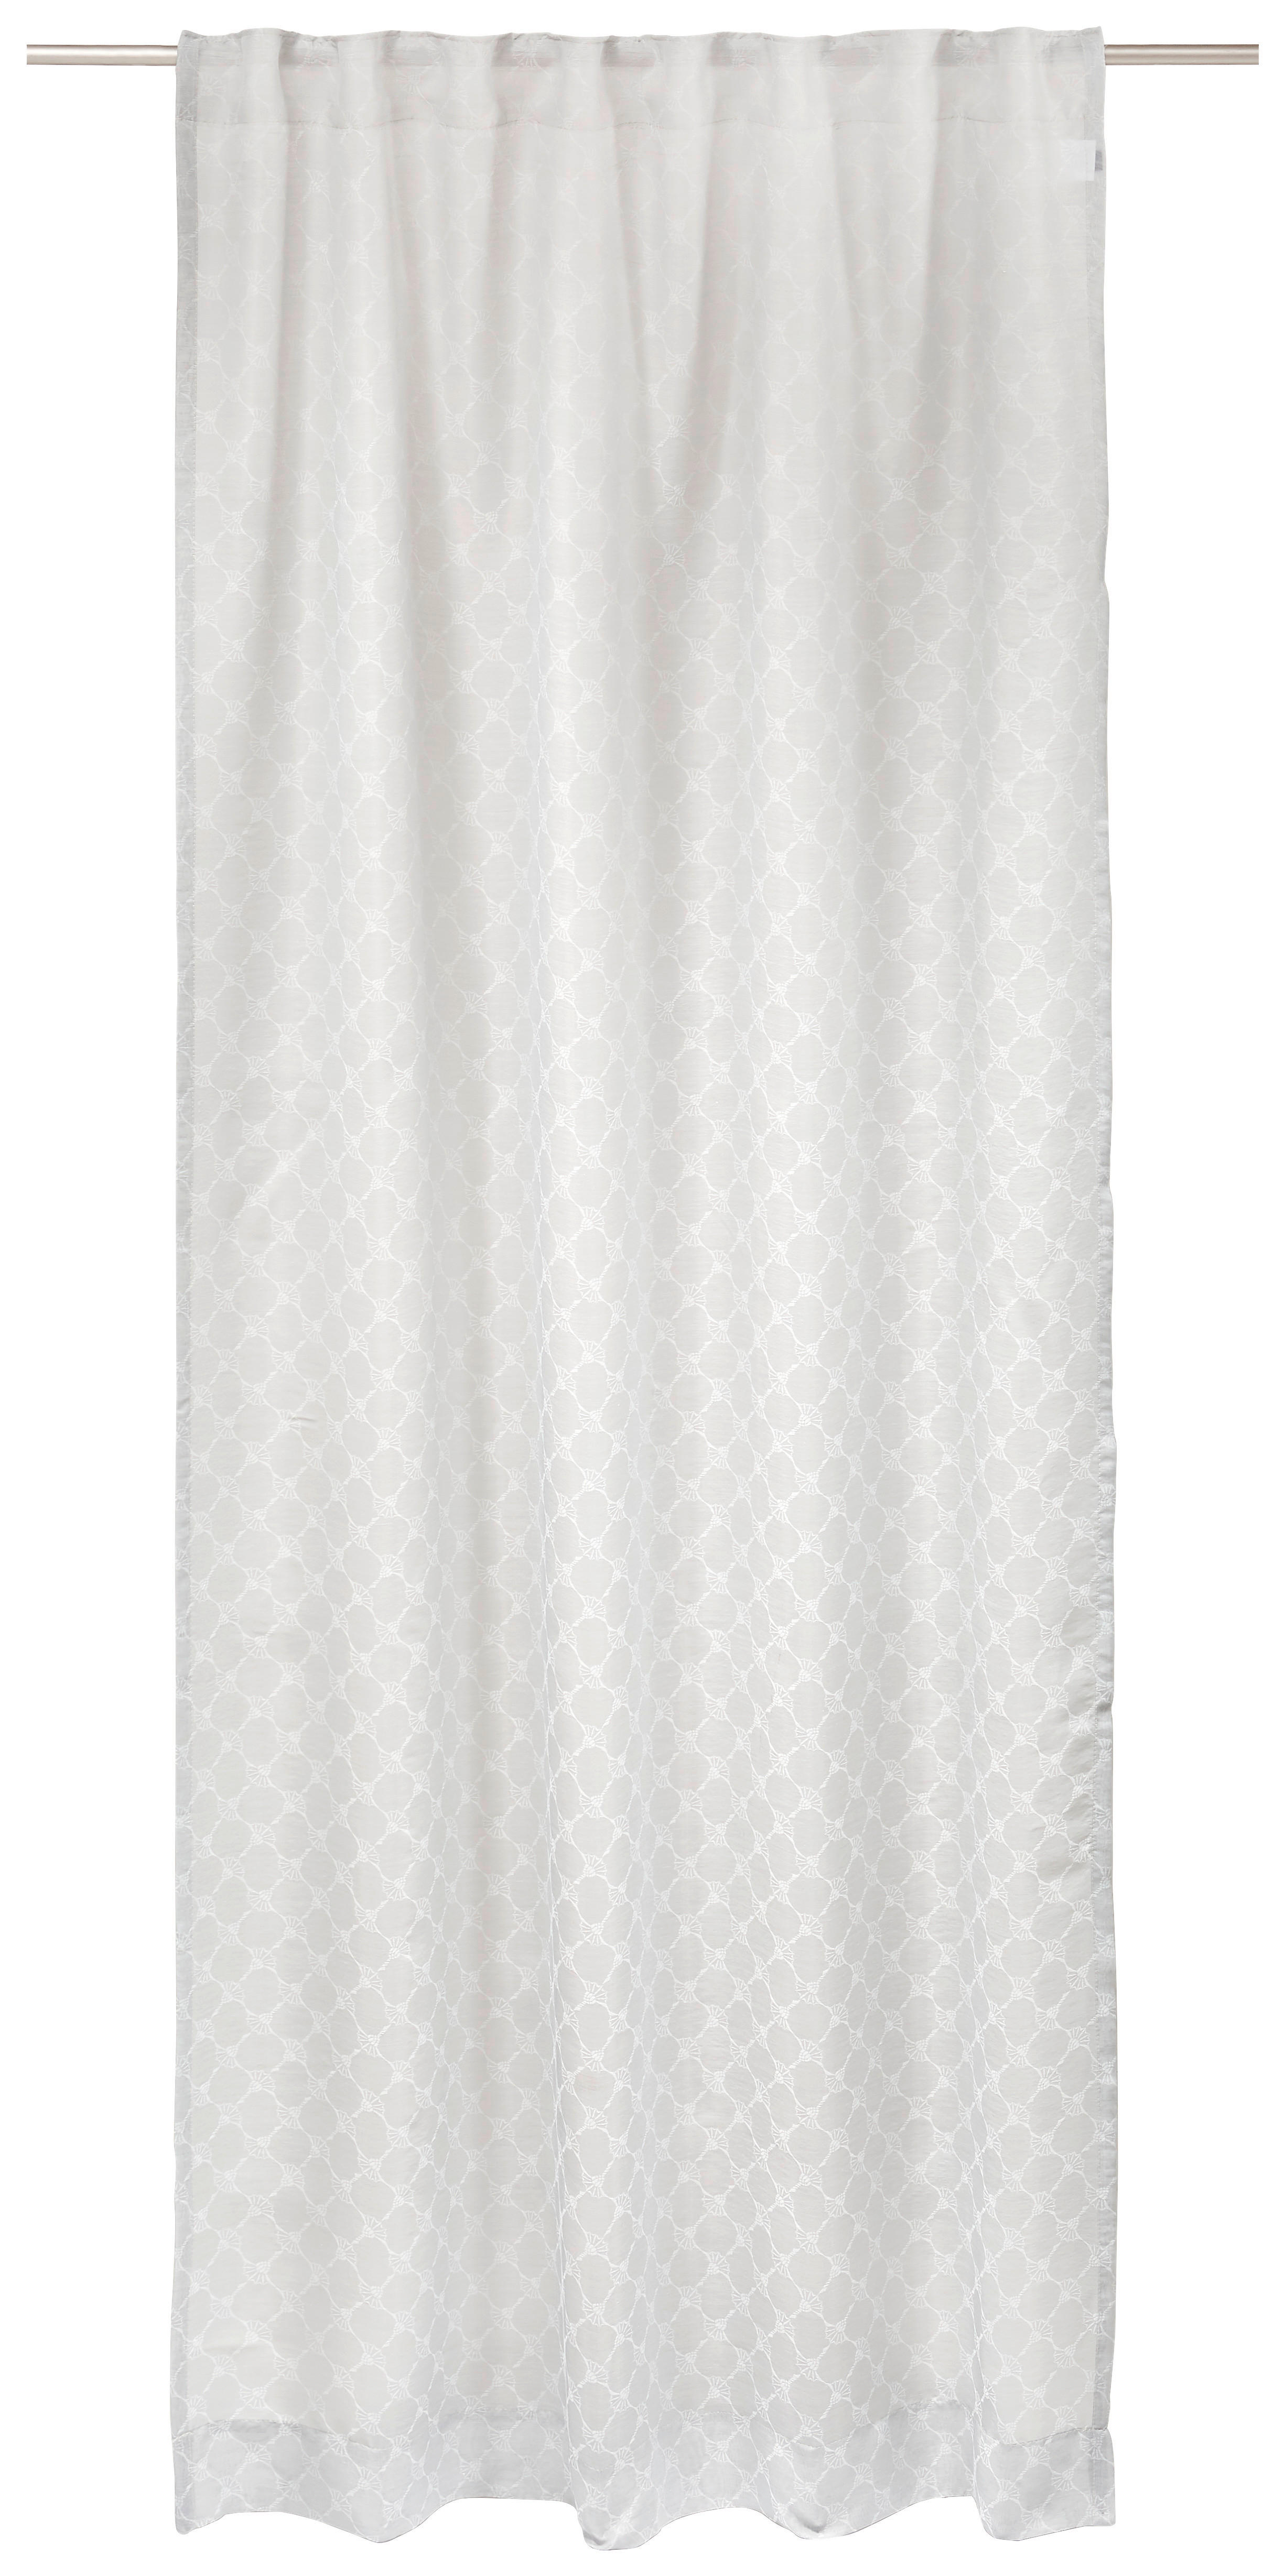 FERTIGVORHANG Glare transparent 130/250 cm   - Grau, Basics, Textil (130/250cm) - Joop!